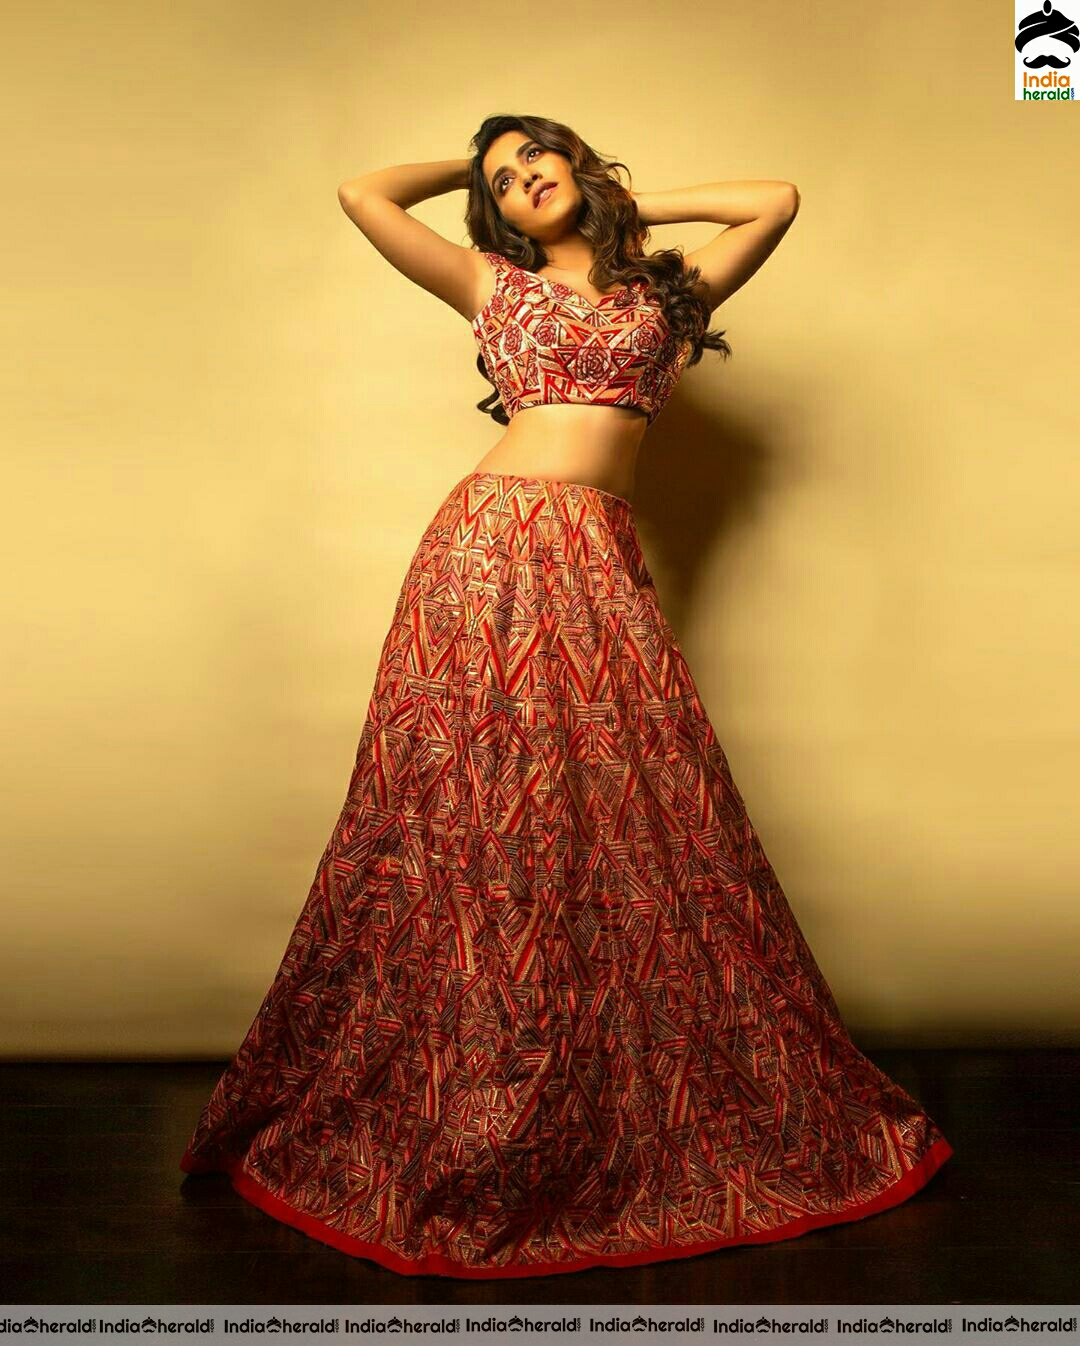 Nabha Natesh Showing A Sexy Hot Tummy In These Latest Photoshoot